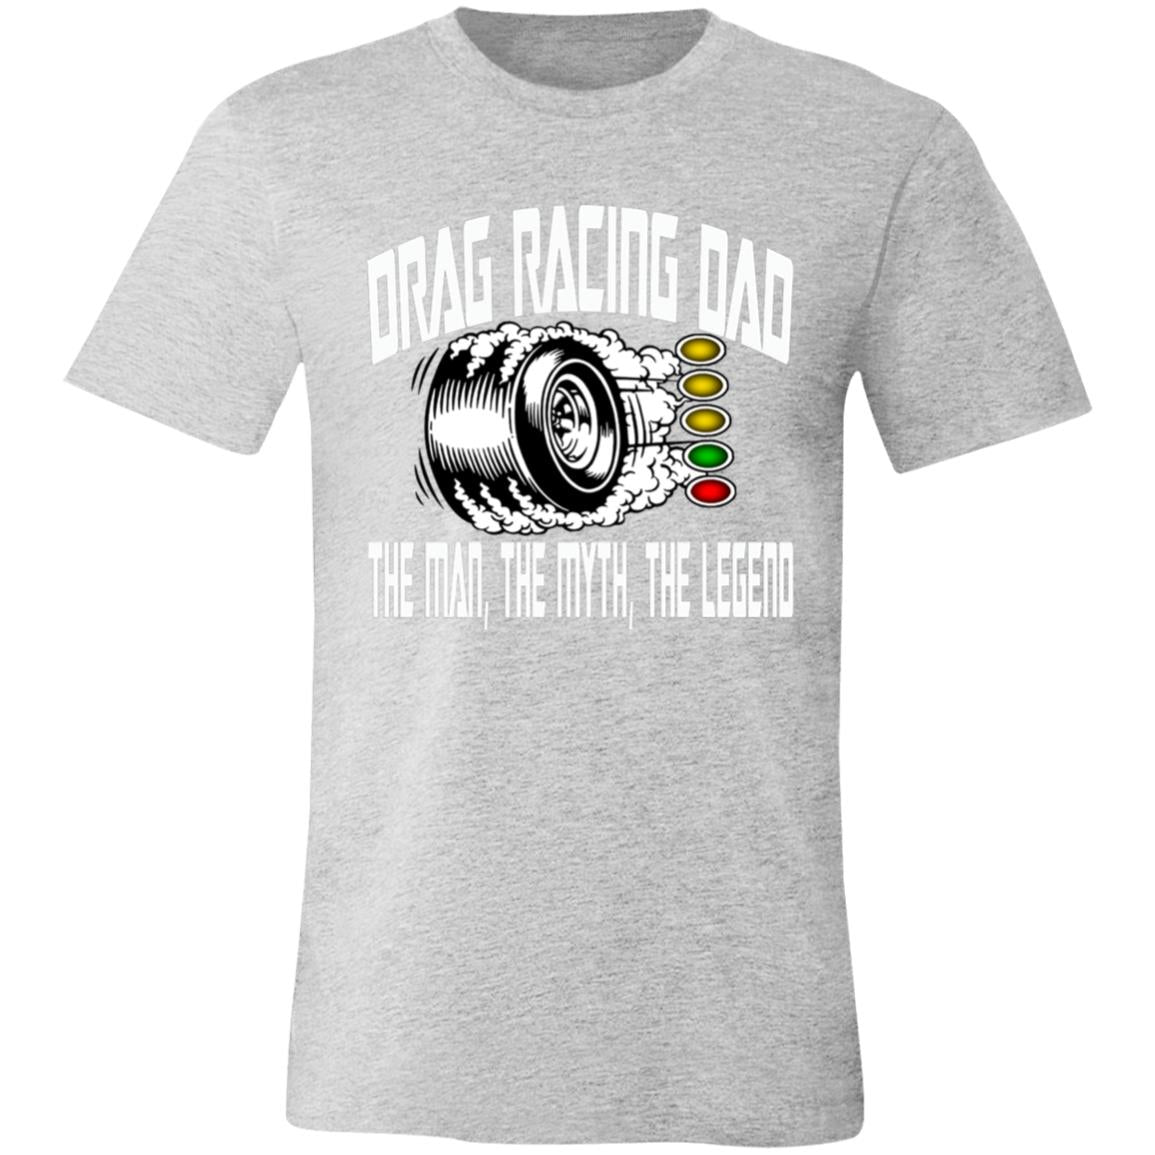 Drag Racing Dad Unisex Jersey Short-Sleeve T-Shirt